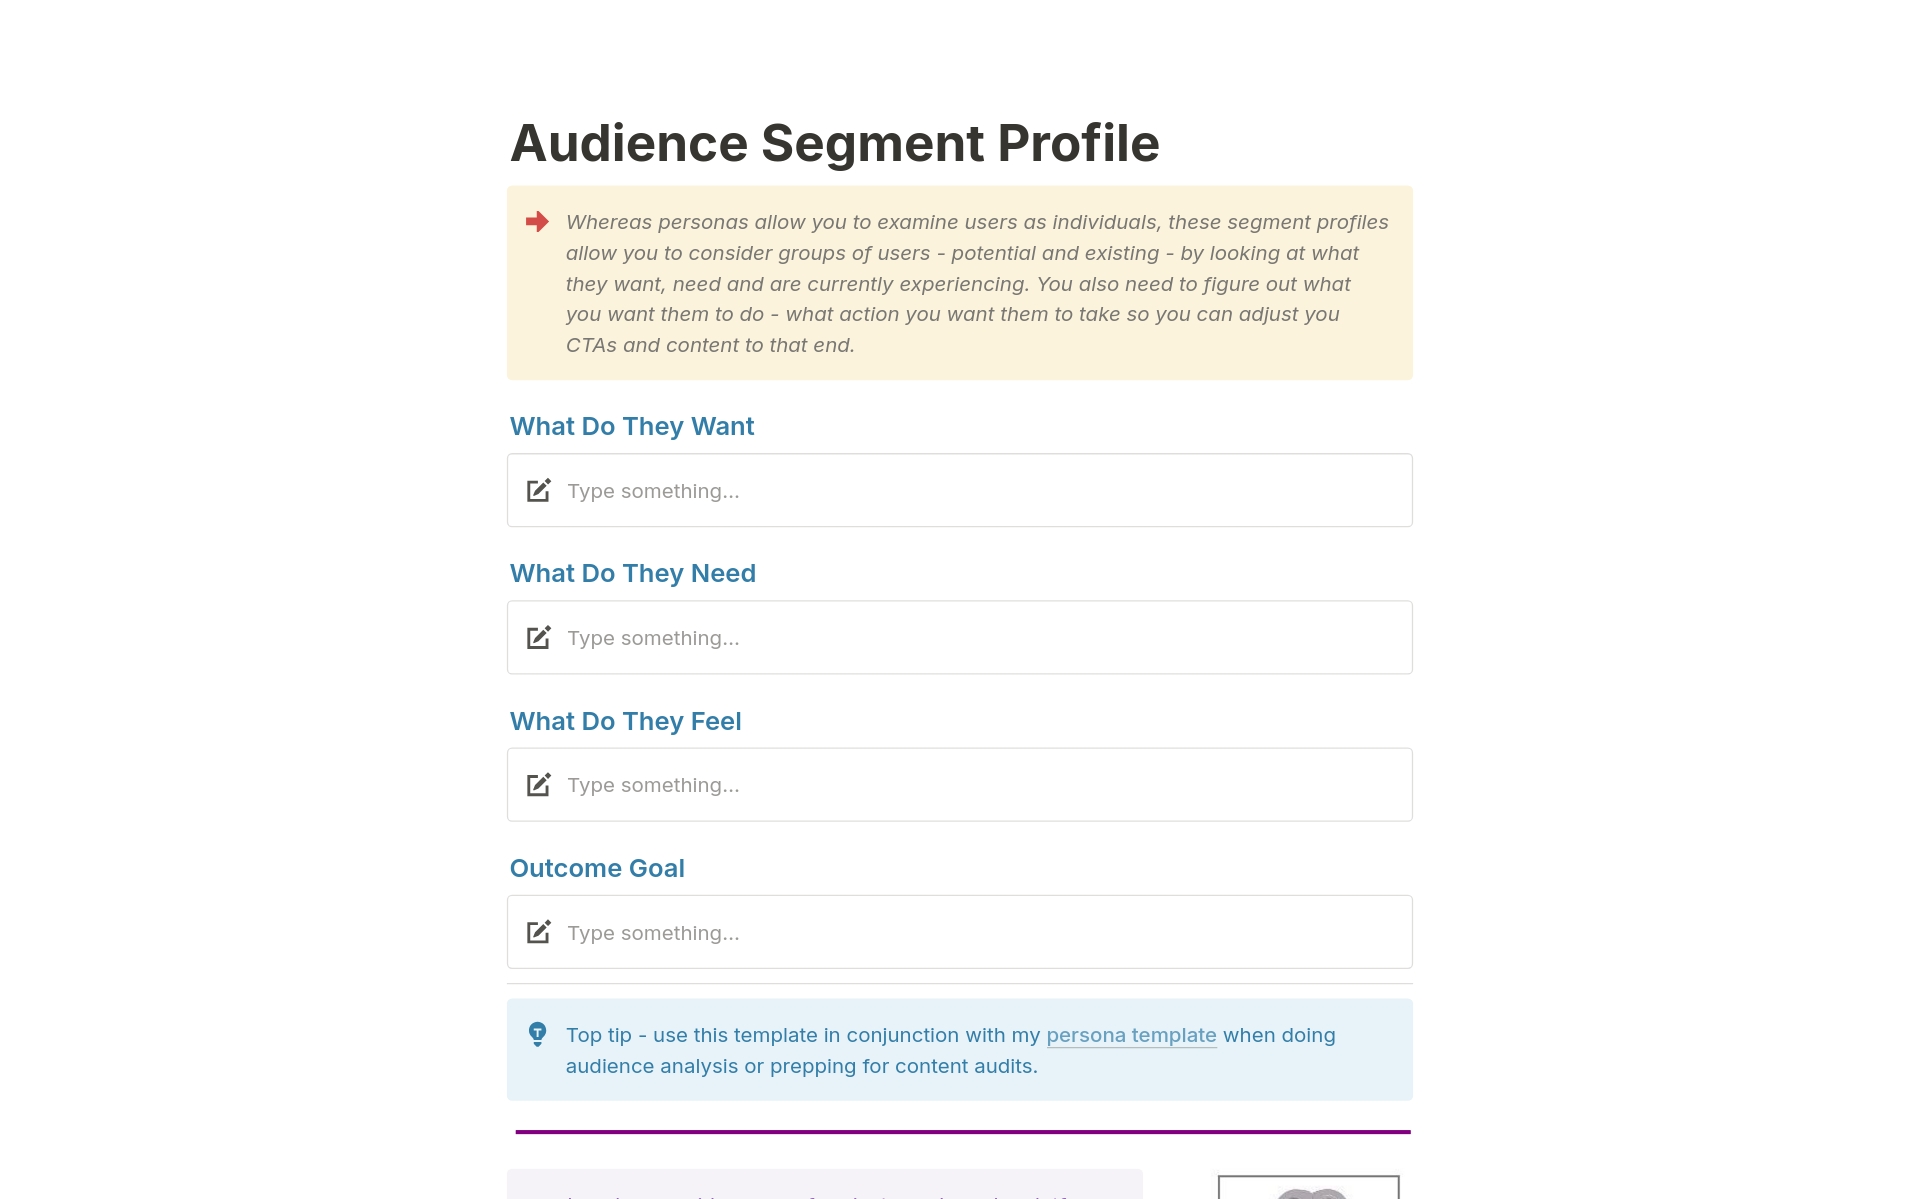 Vista previa de plantilla para Audience Segment Profile